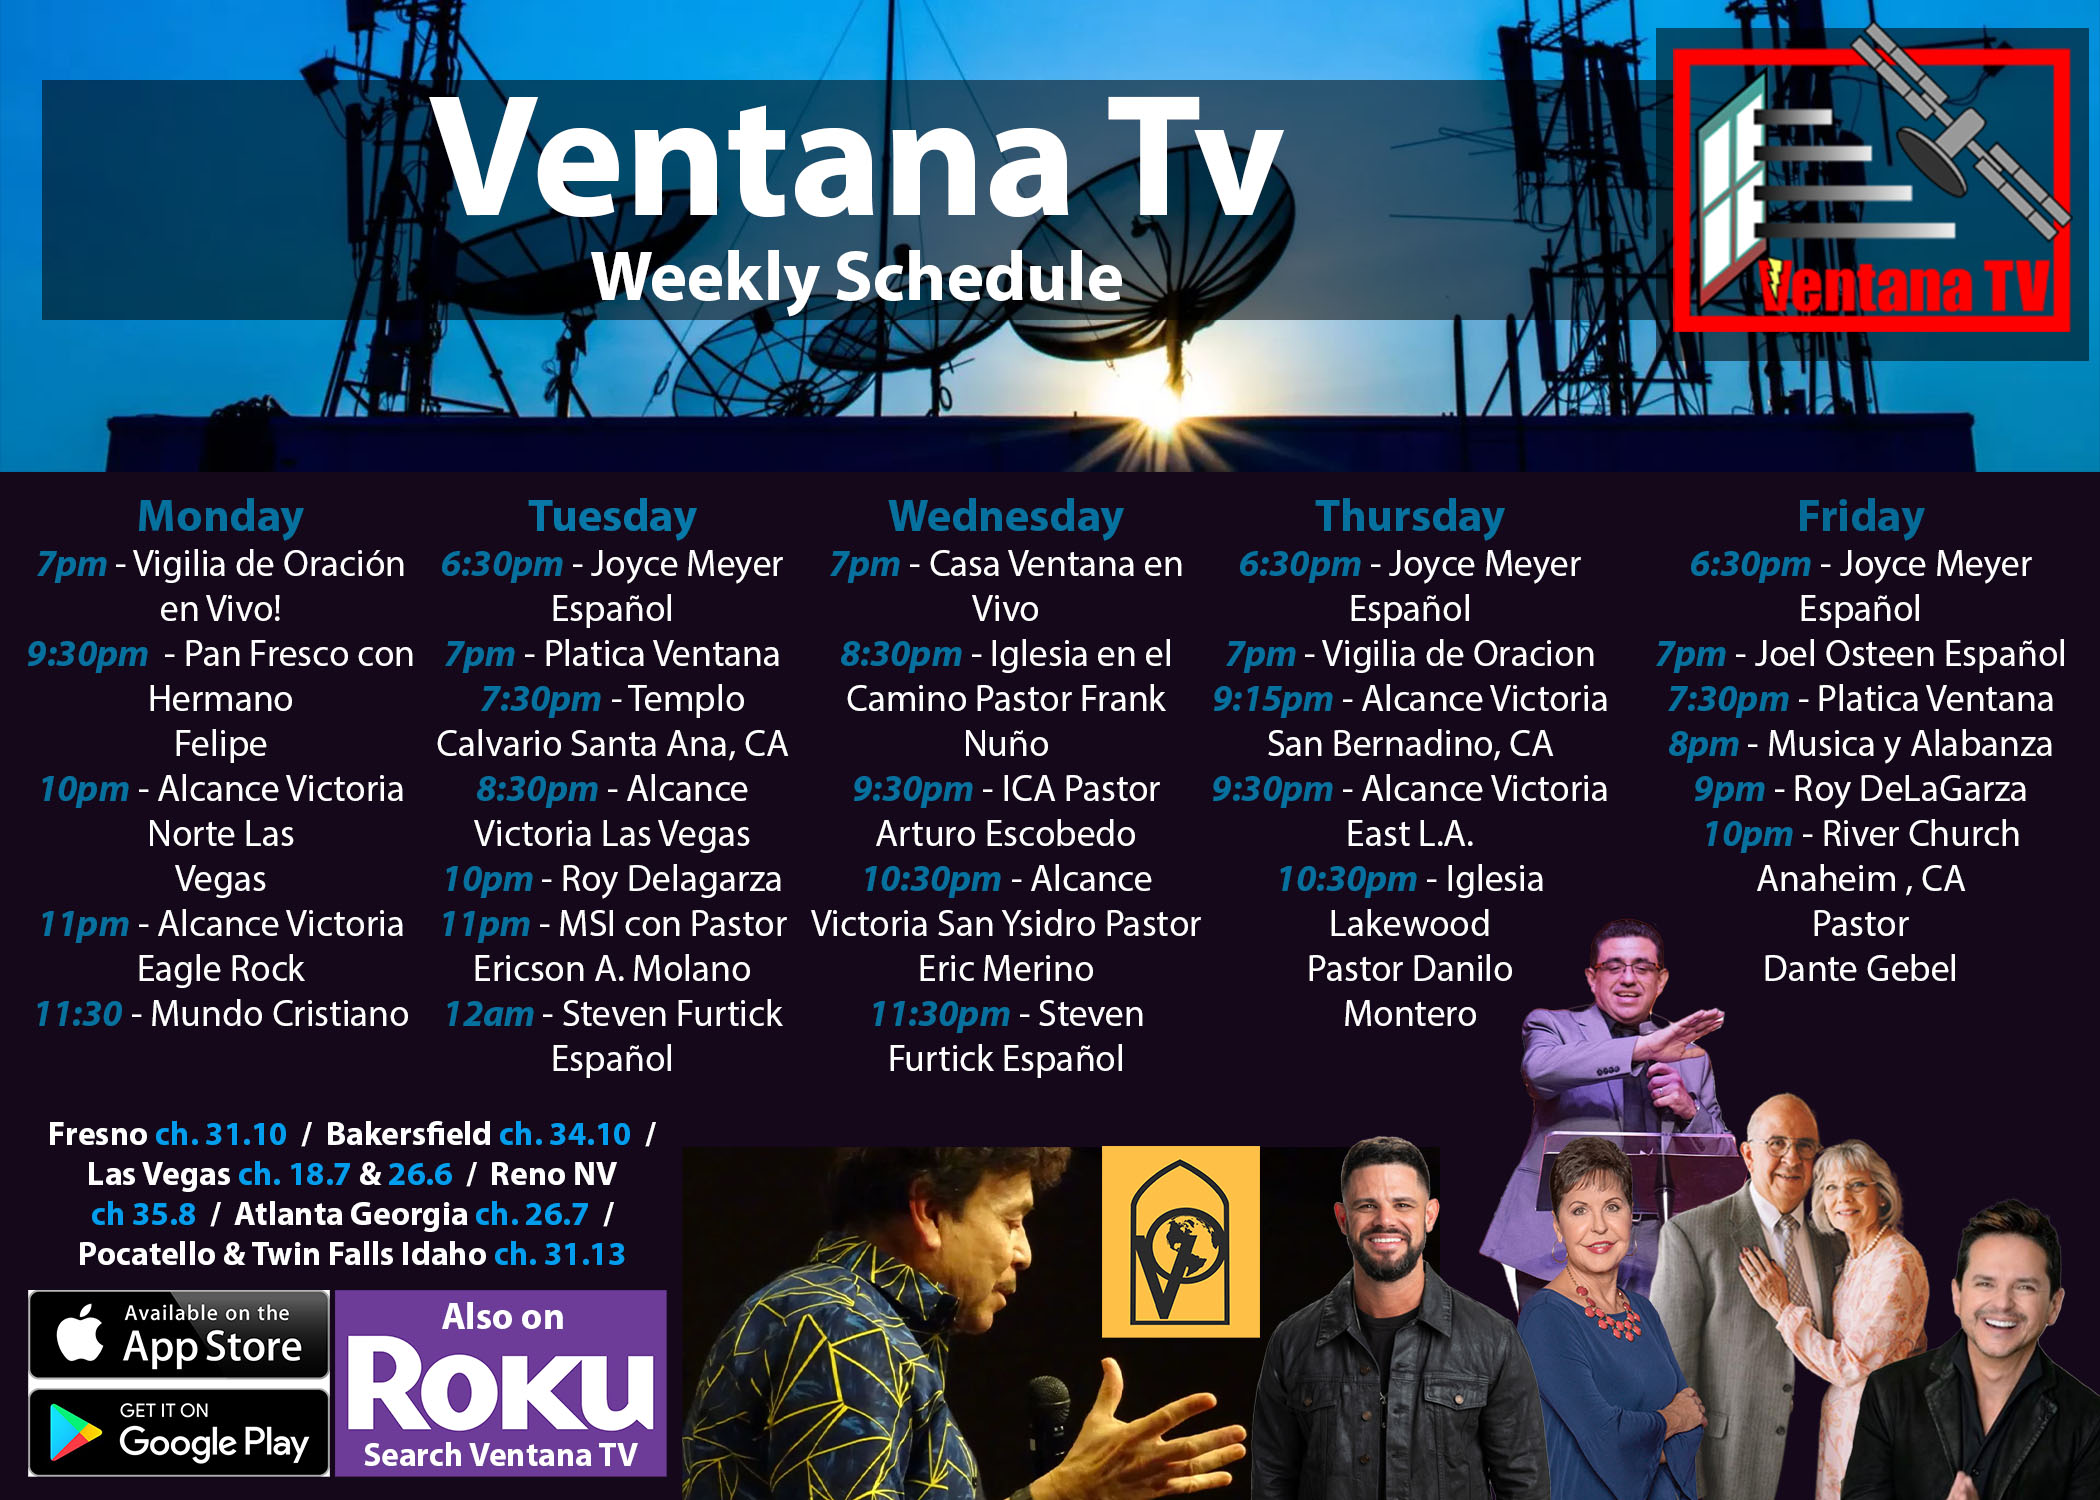 The Schedule for VentanaTV